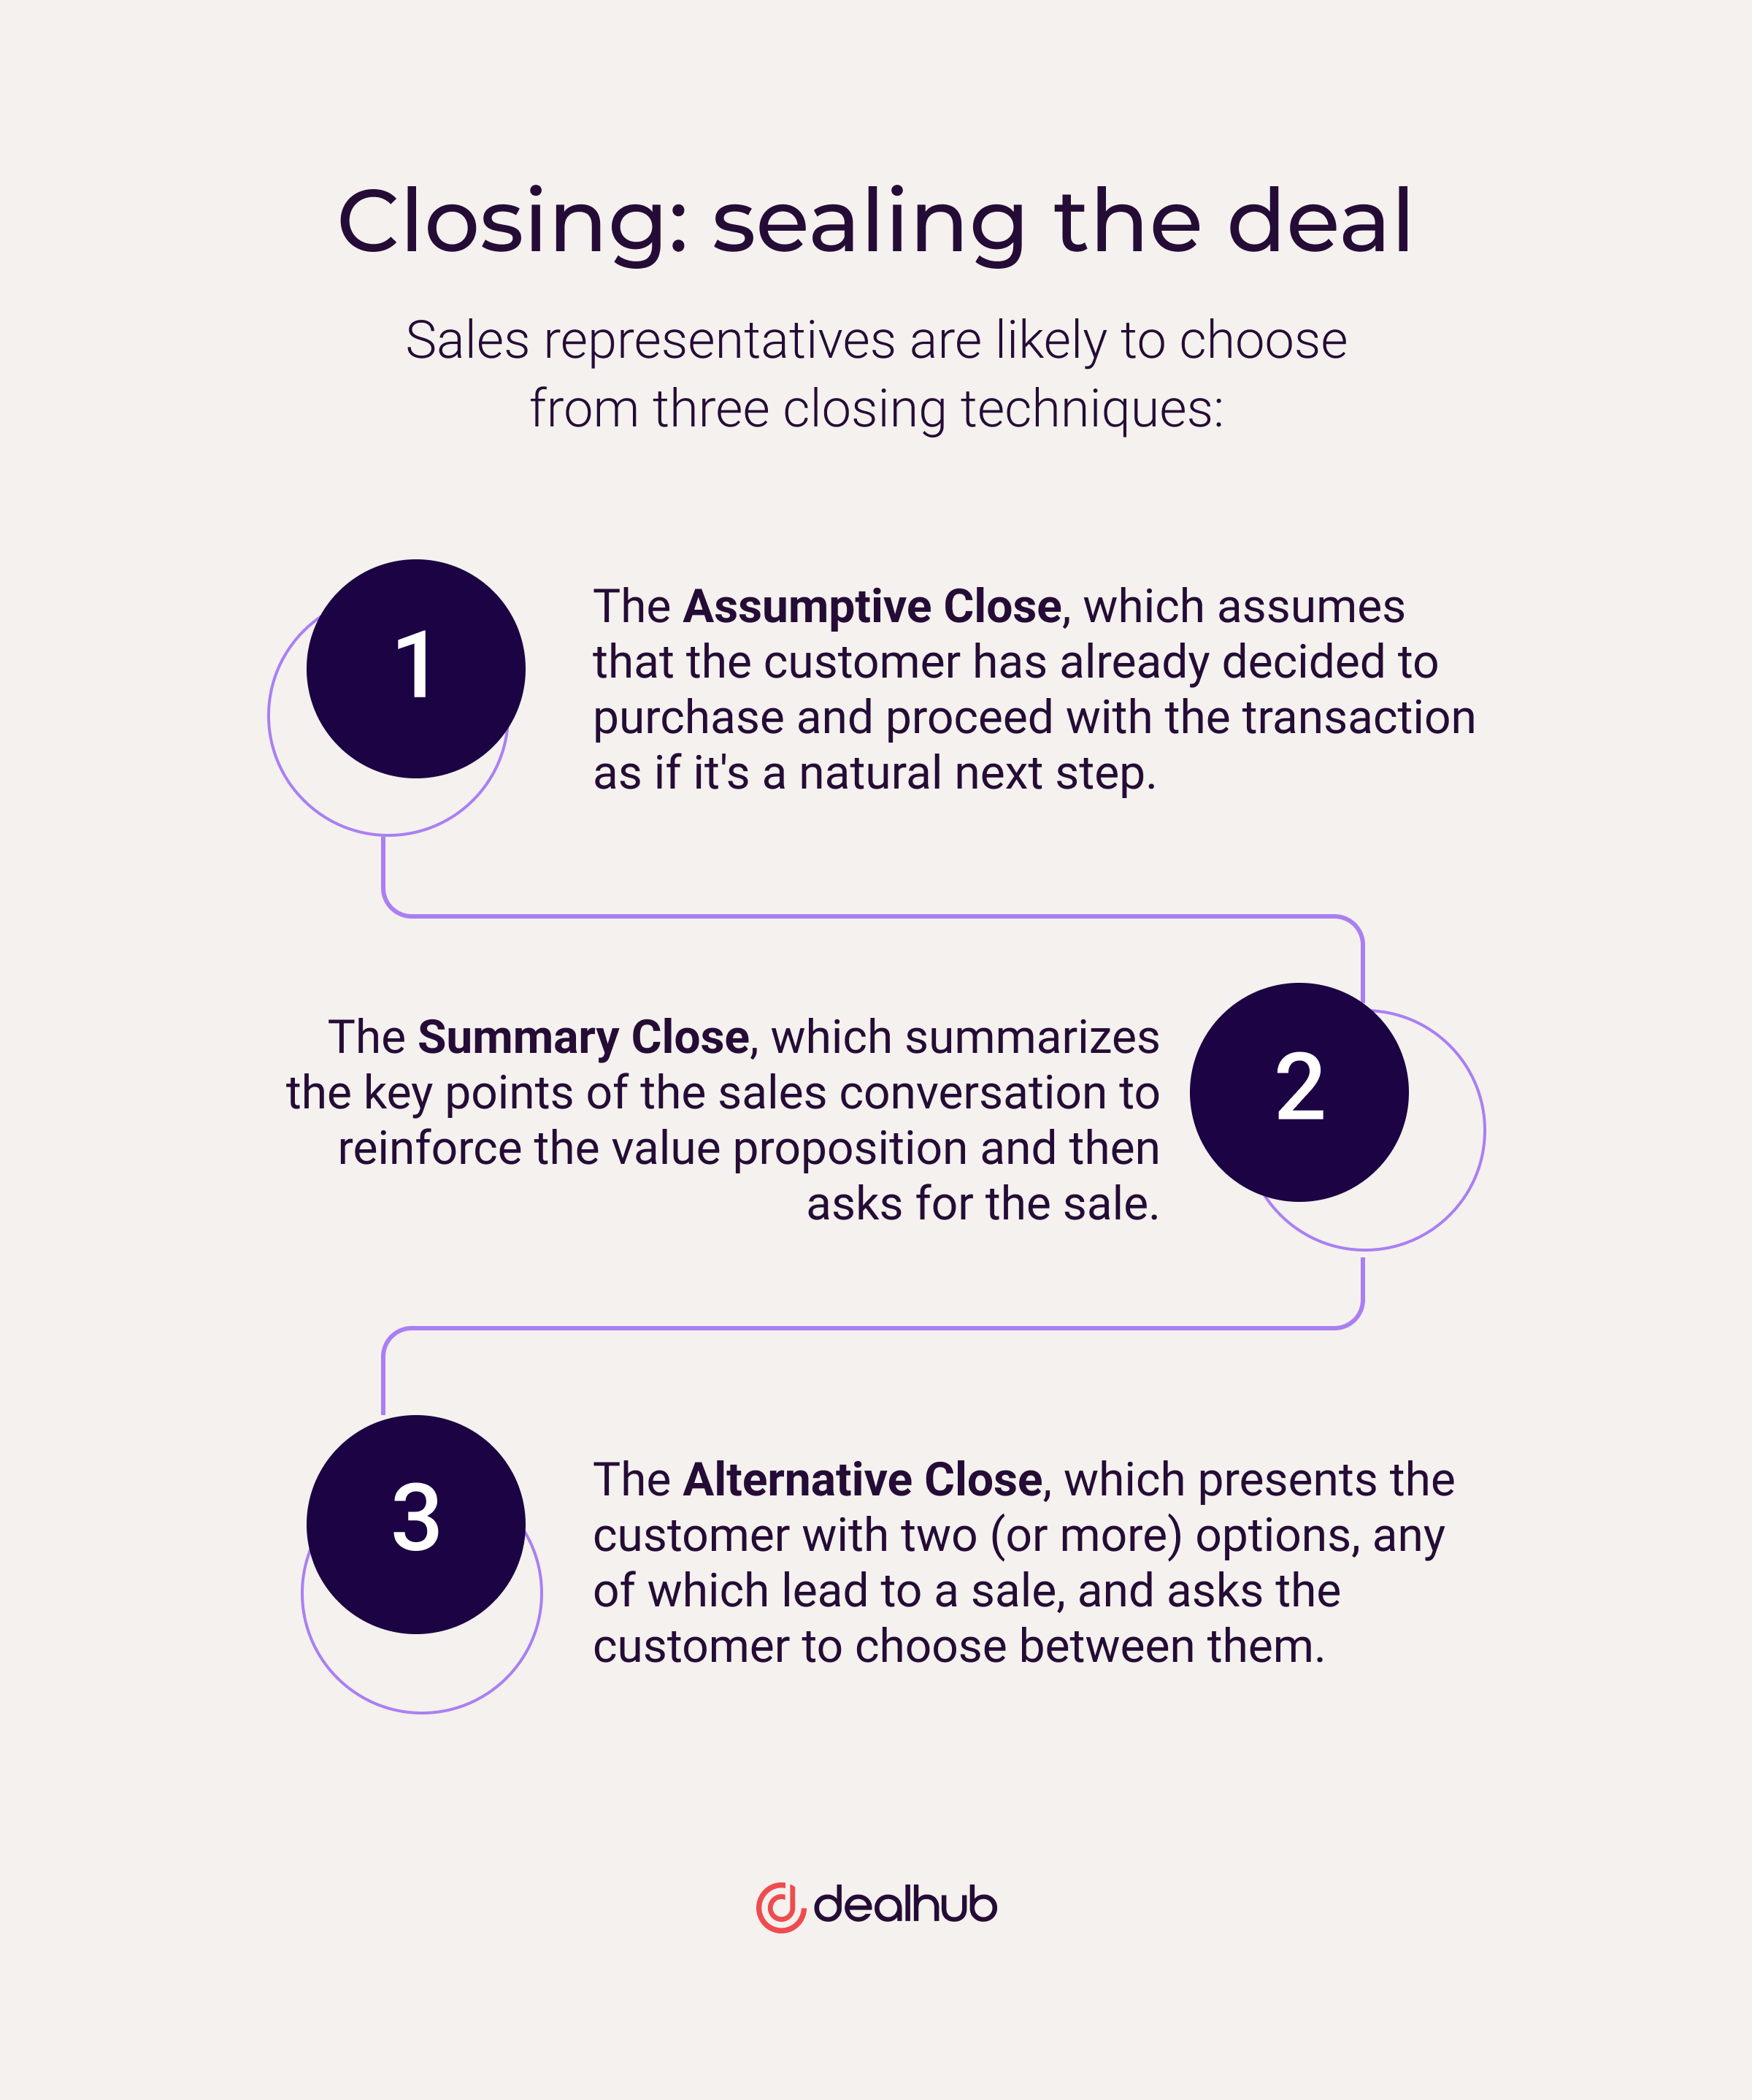 Closing: sealing the deal